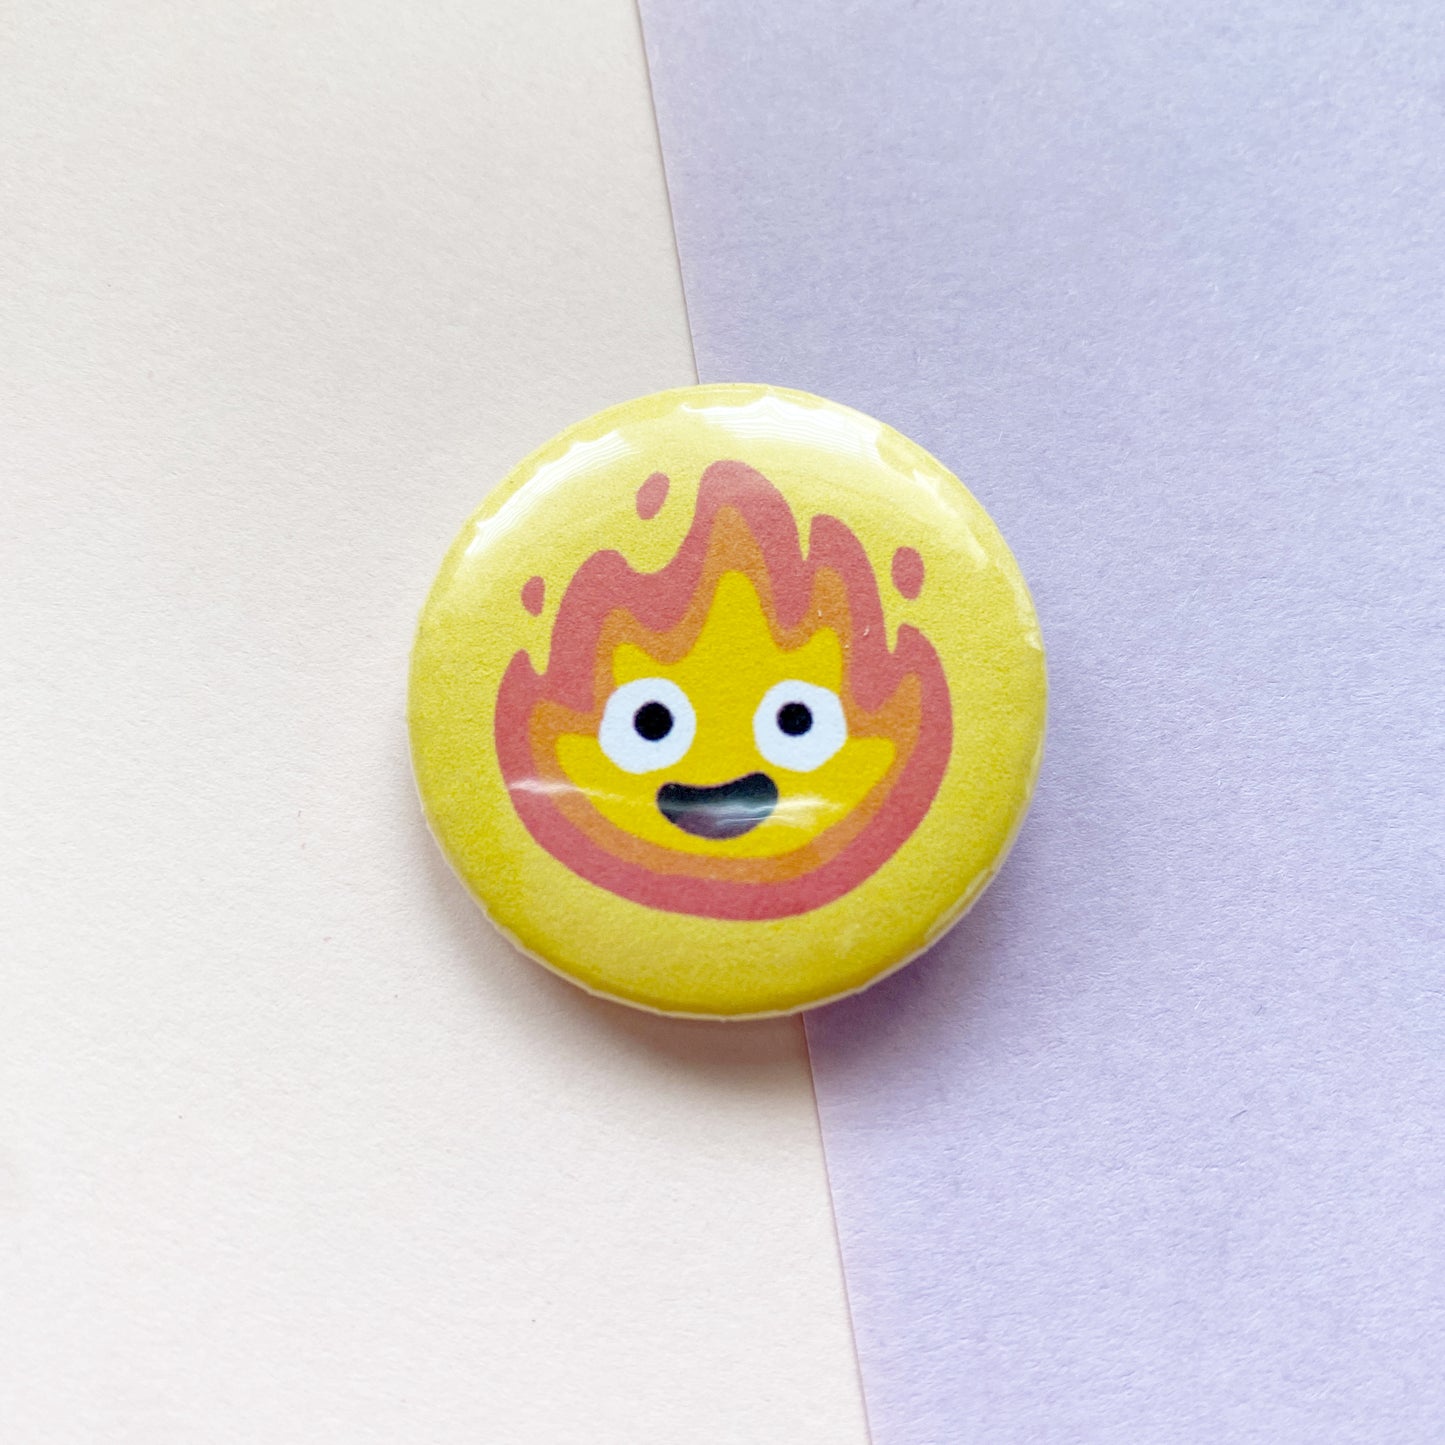 Calcifer/Fire | Button Pin